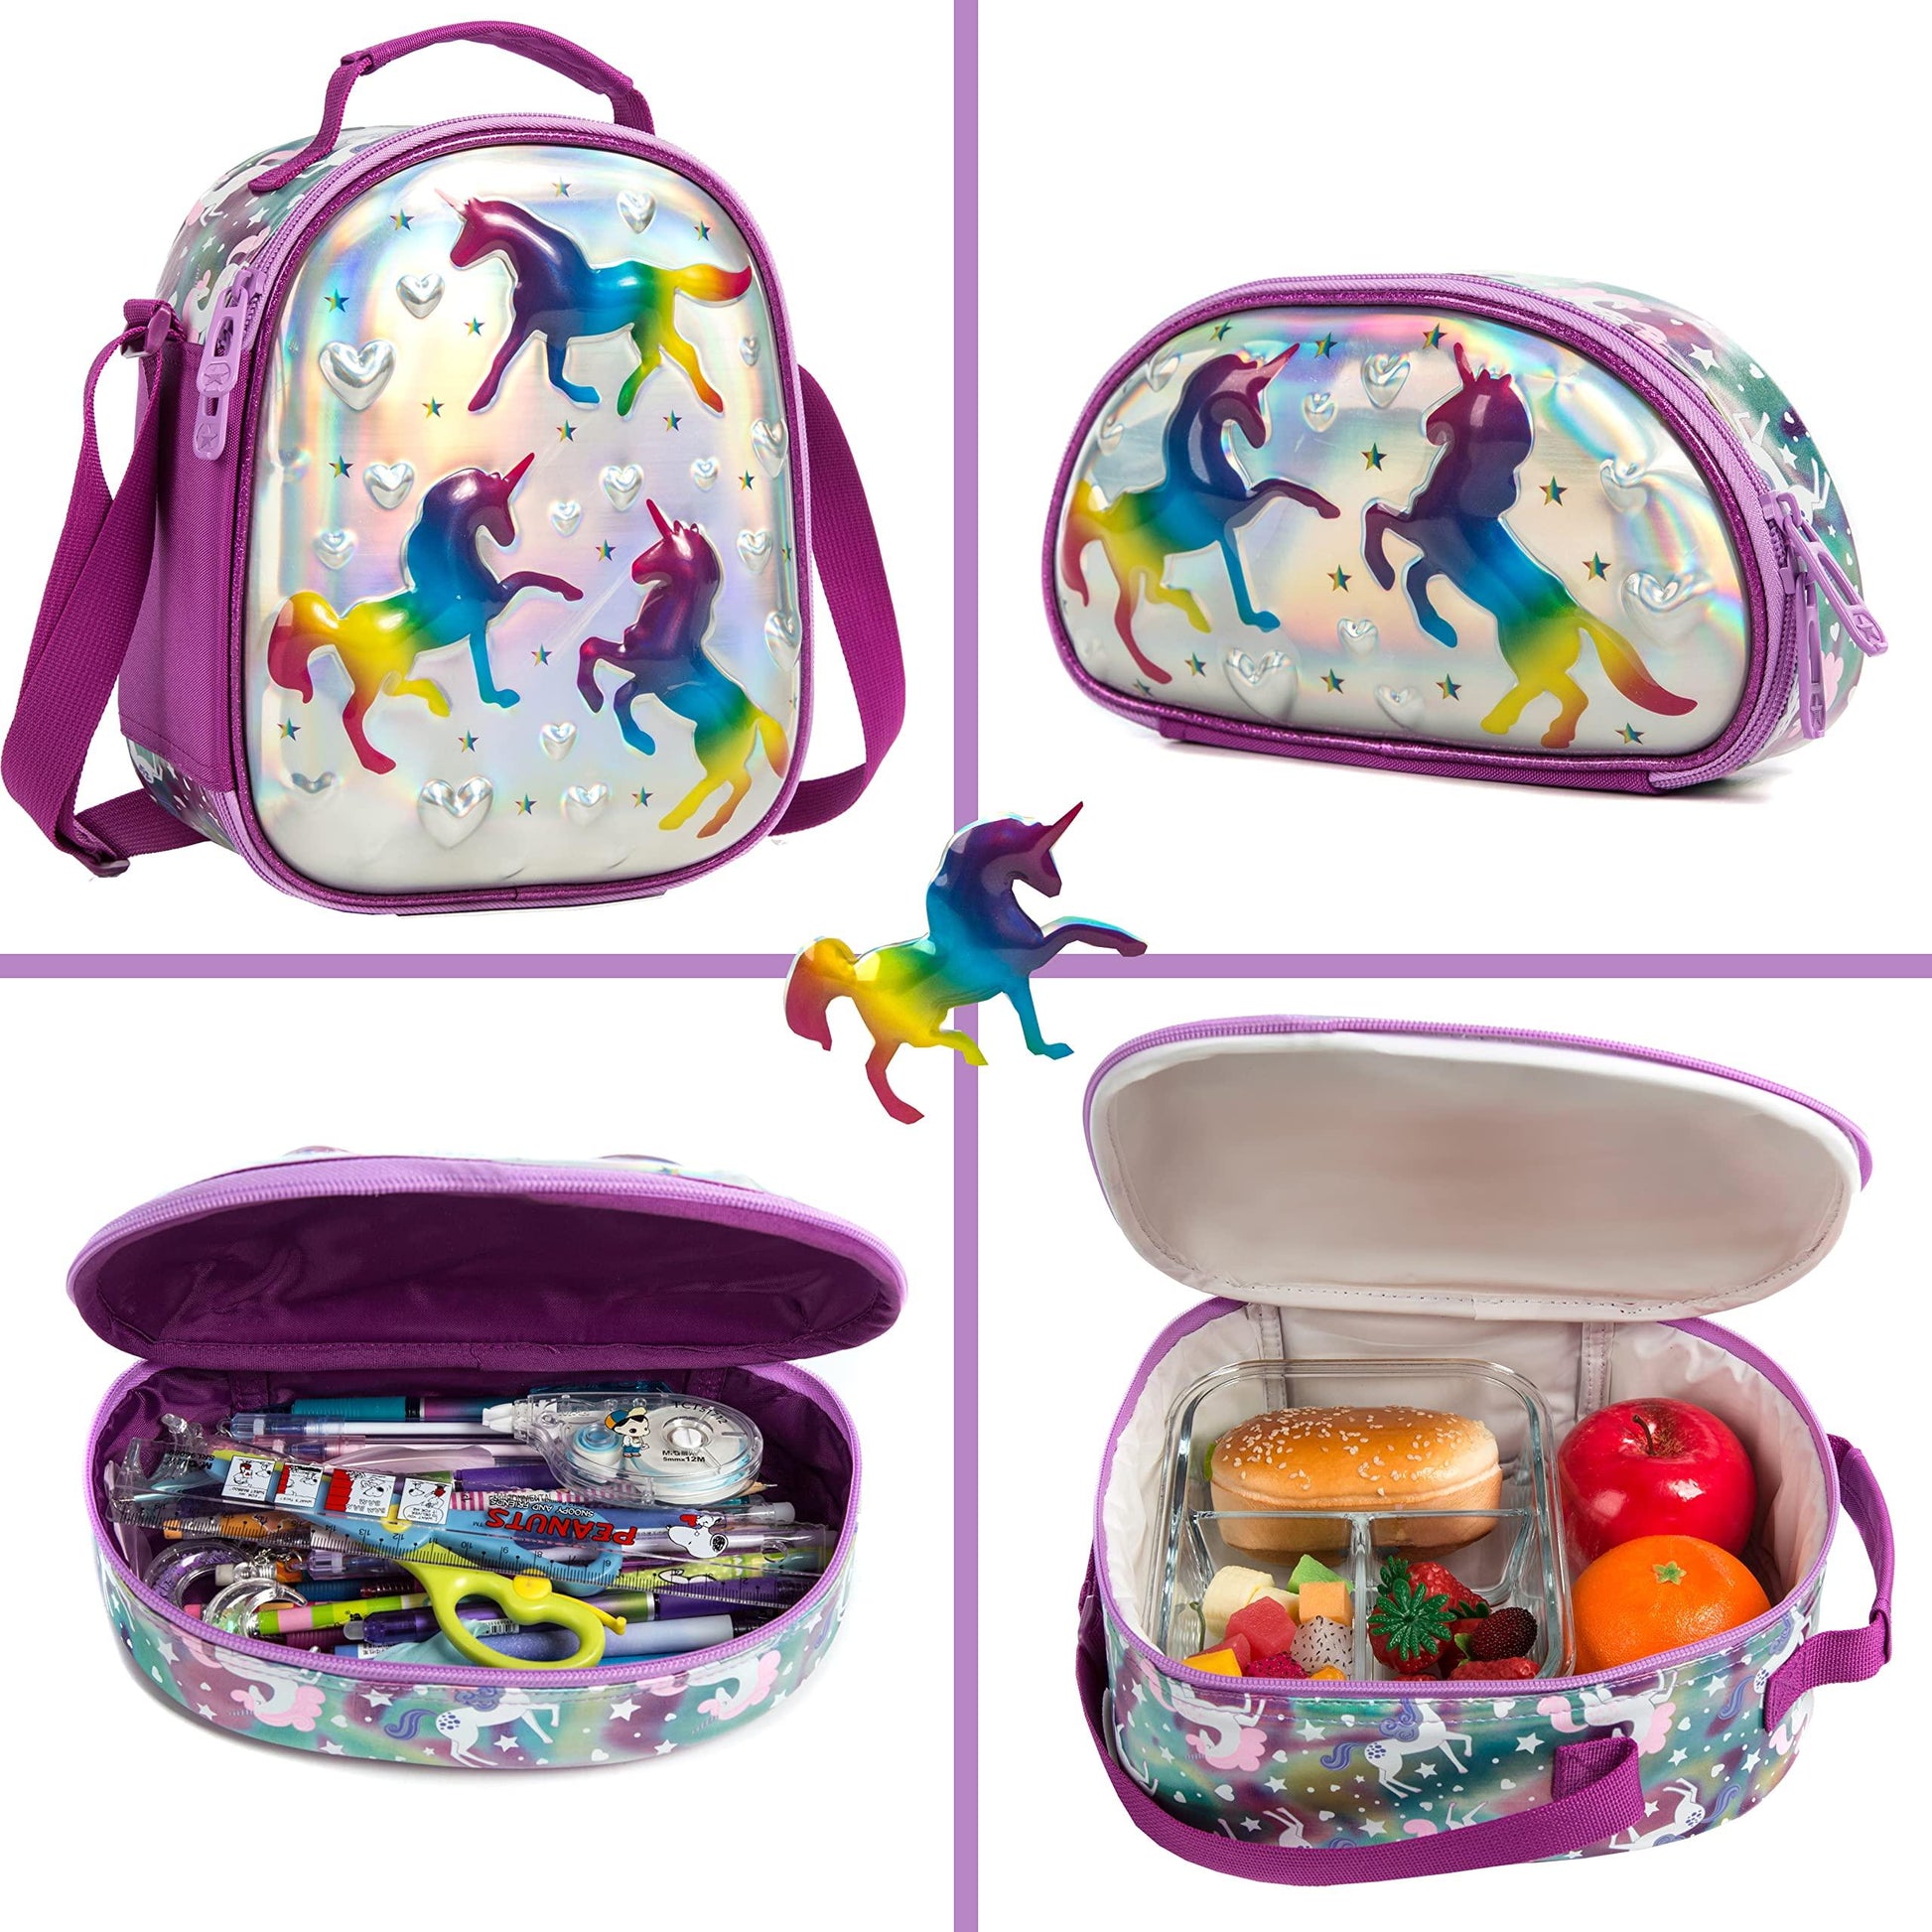 3 in 1 unicorn backpack - Unicorn